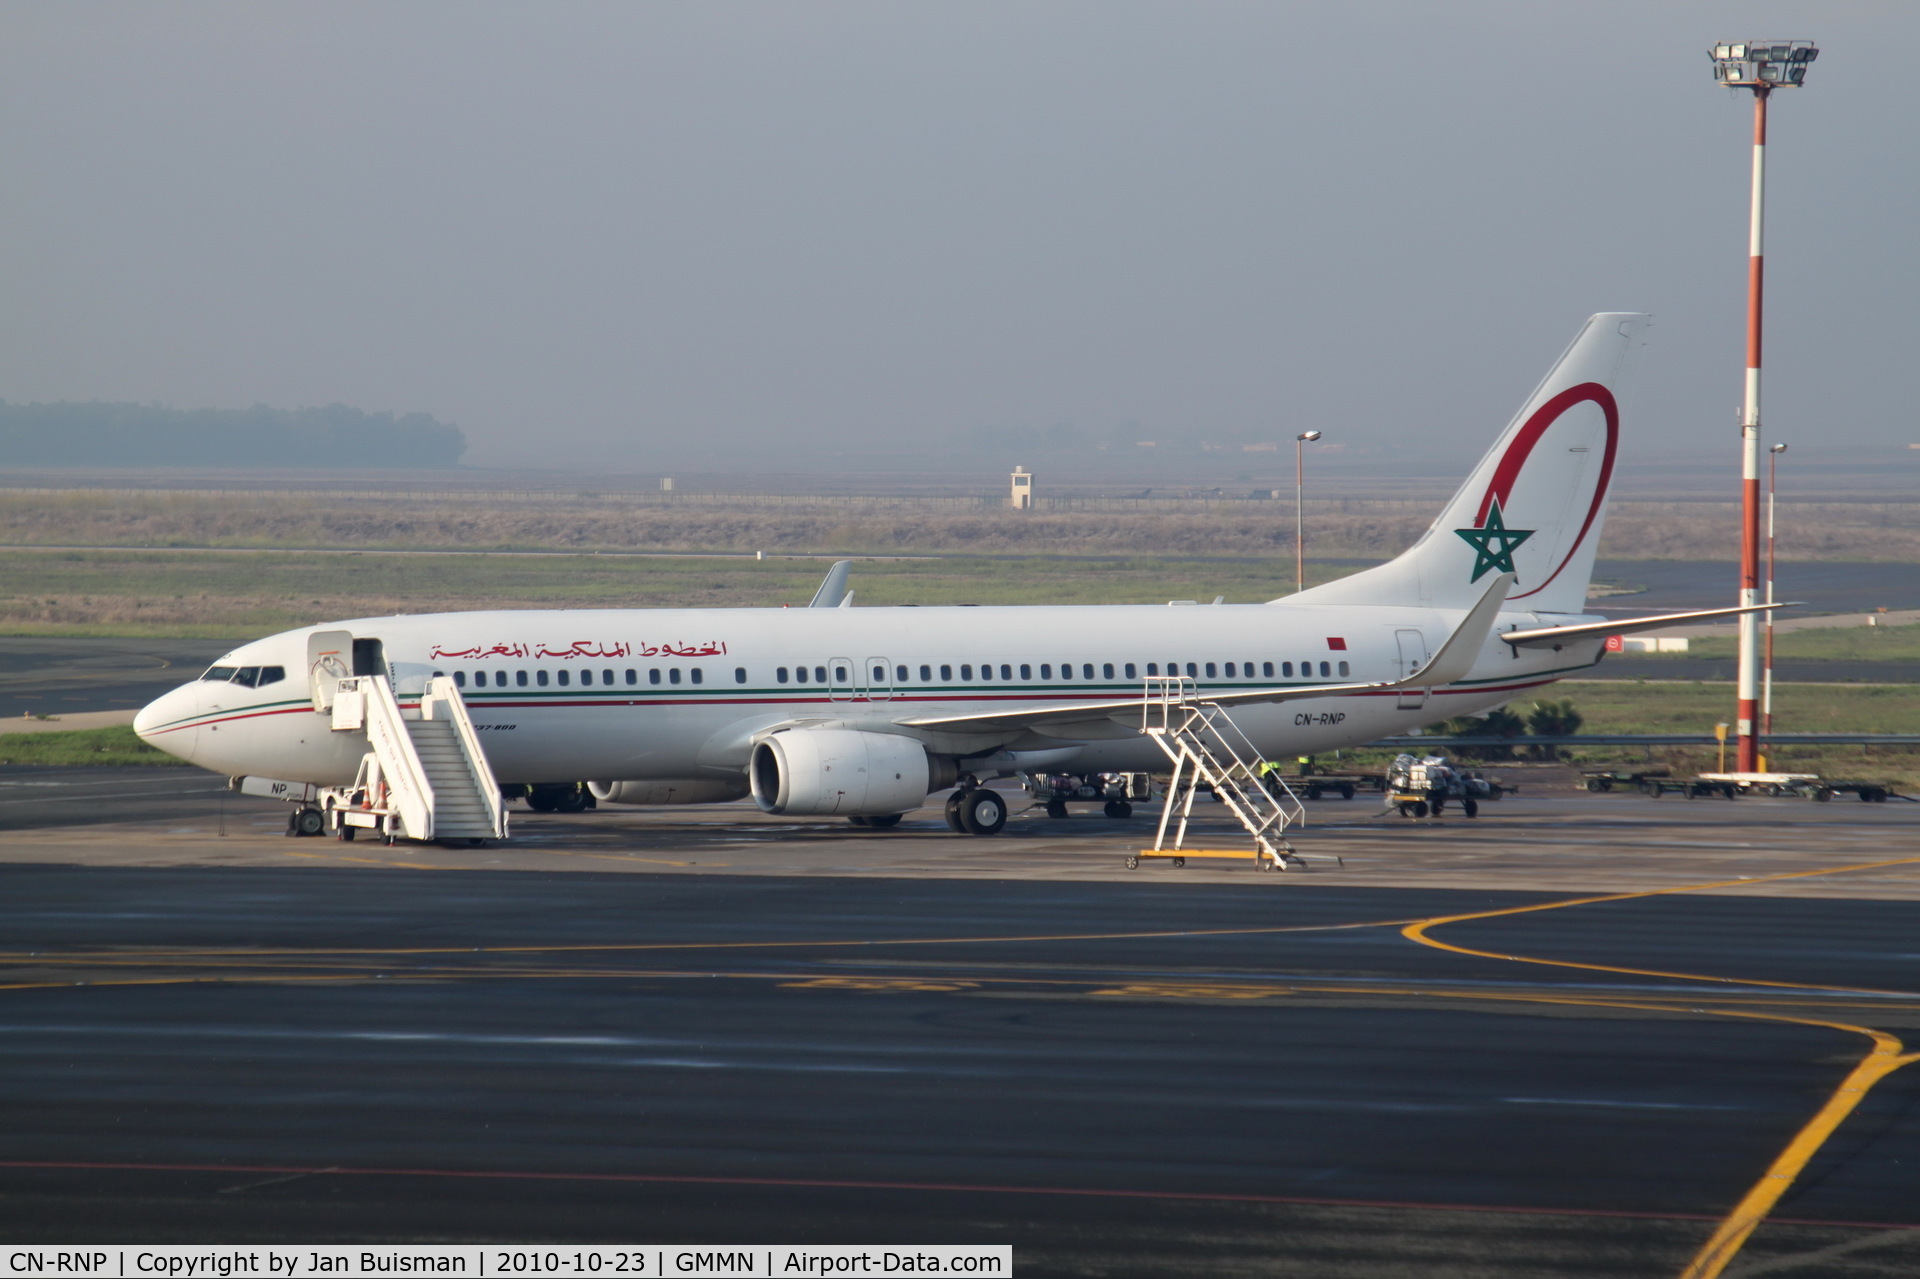 CN-RNP, 2000 Boeing 737-8B6 C/N 28983, Royal Air Maroc